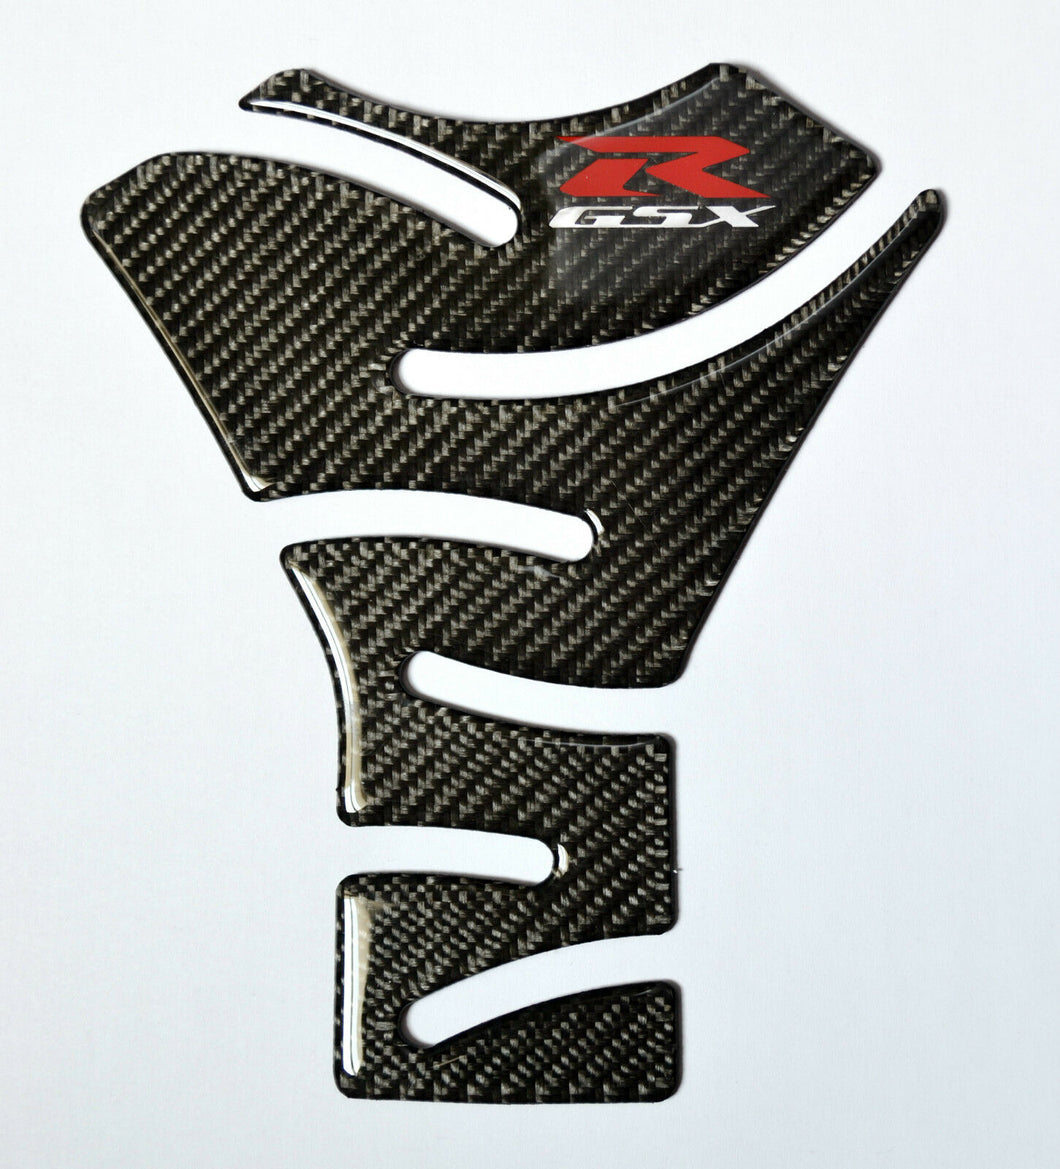 Real Carbon Fiber Tank Protector Pad Sticker trim fits for Suzuki GSX-R